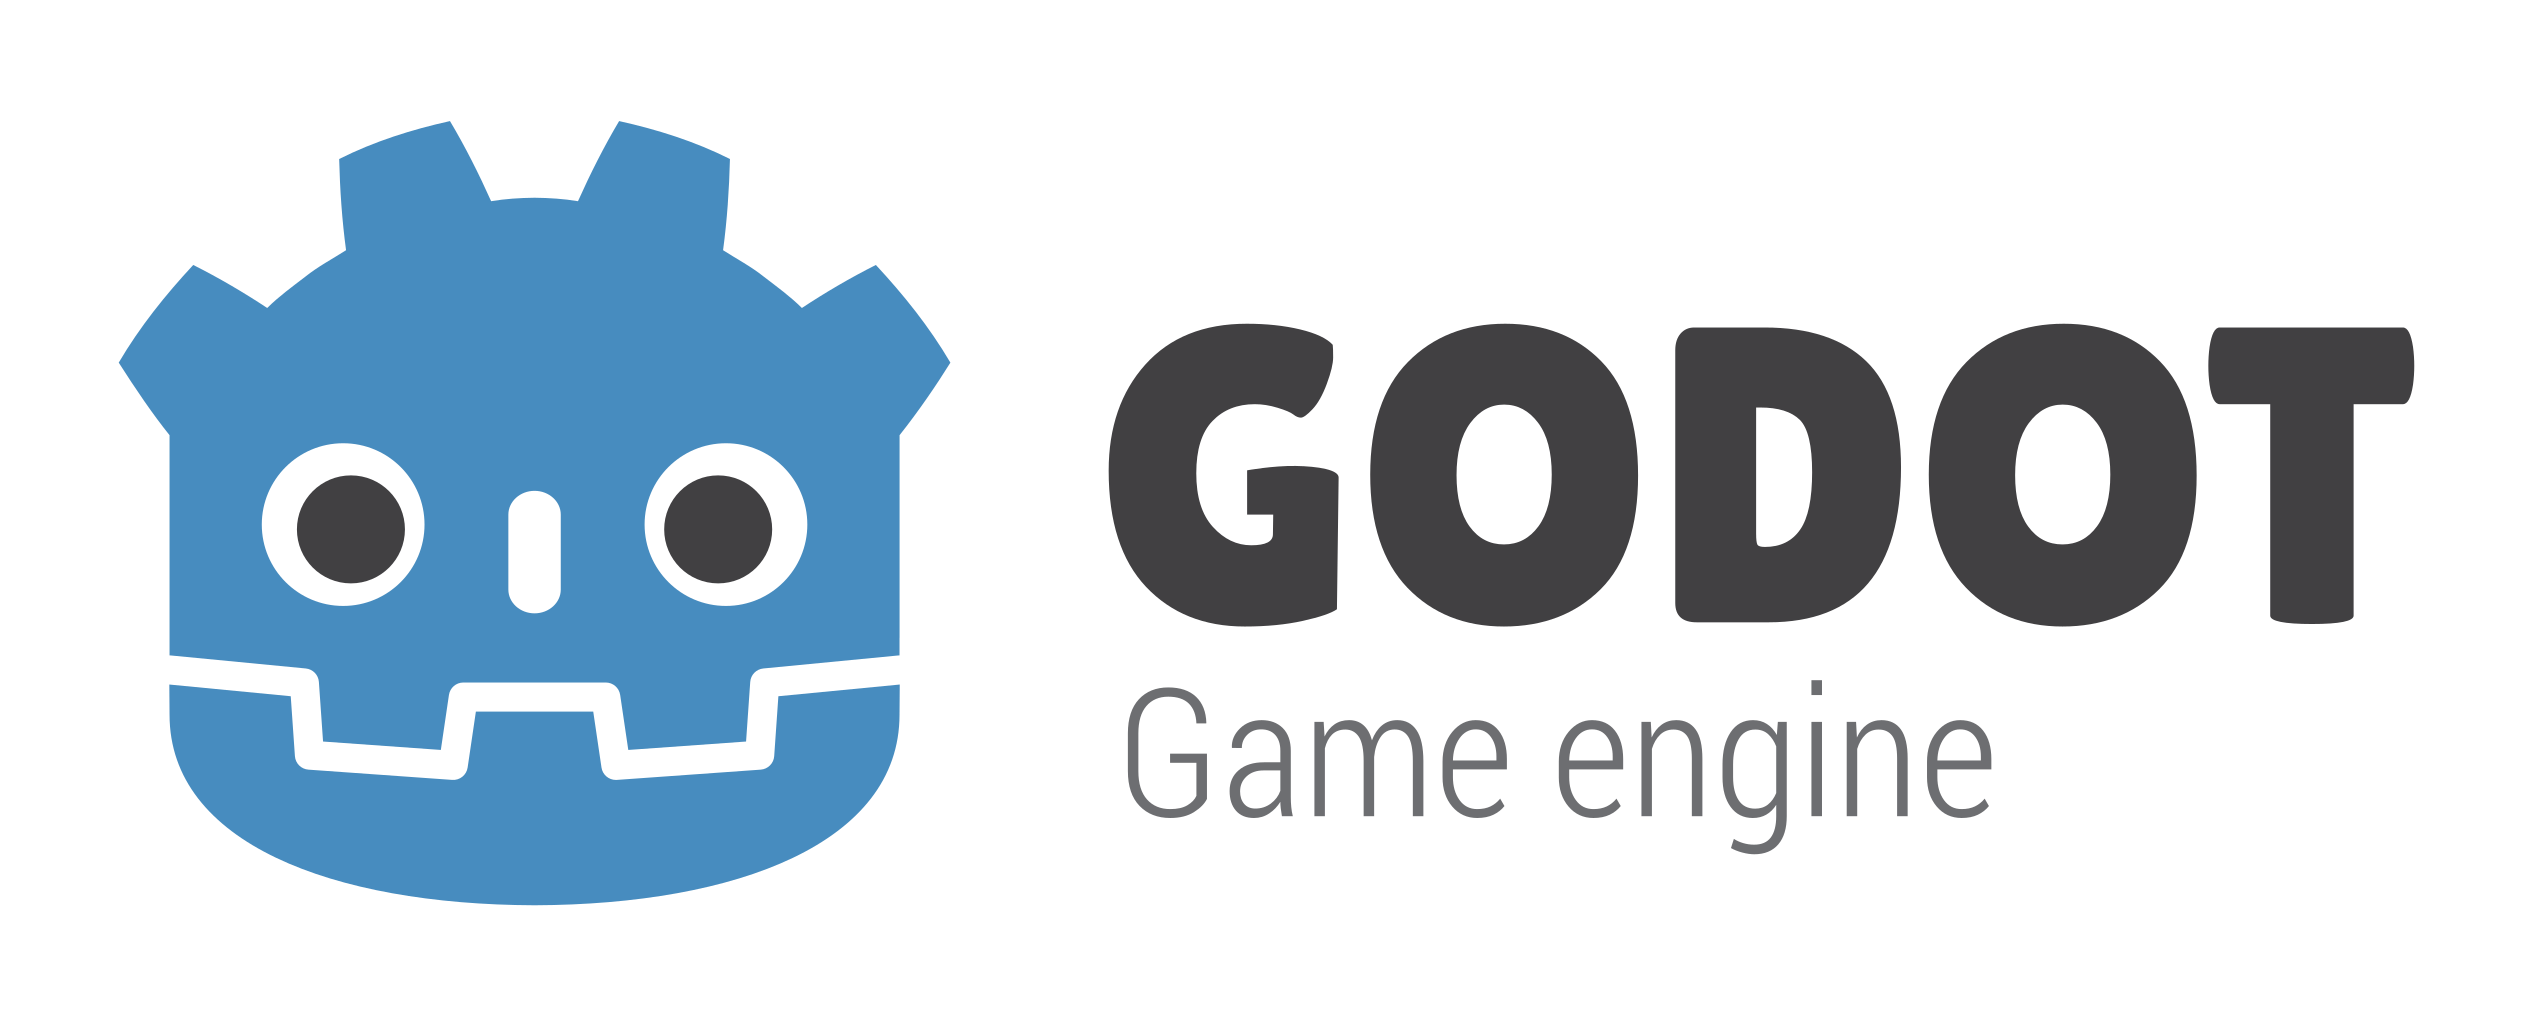 Why do we port Godot engine based games